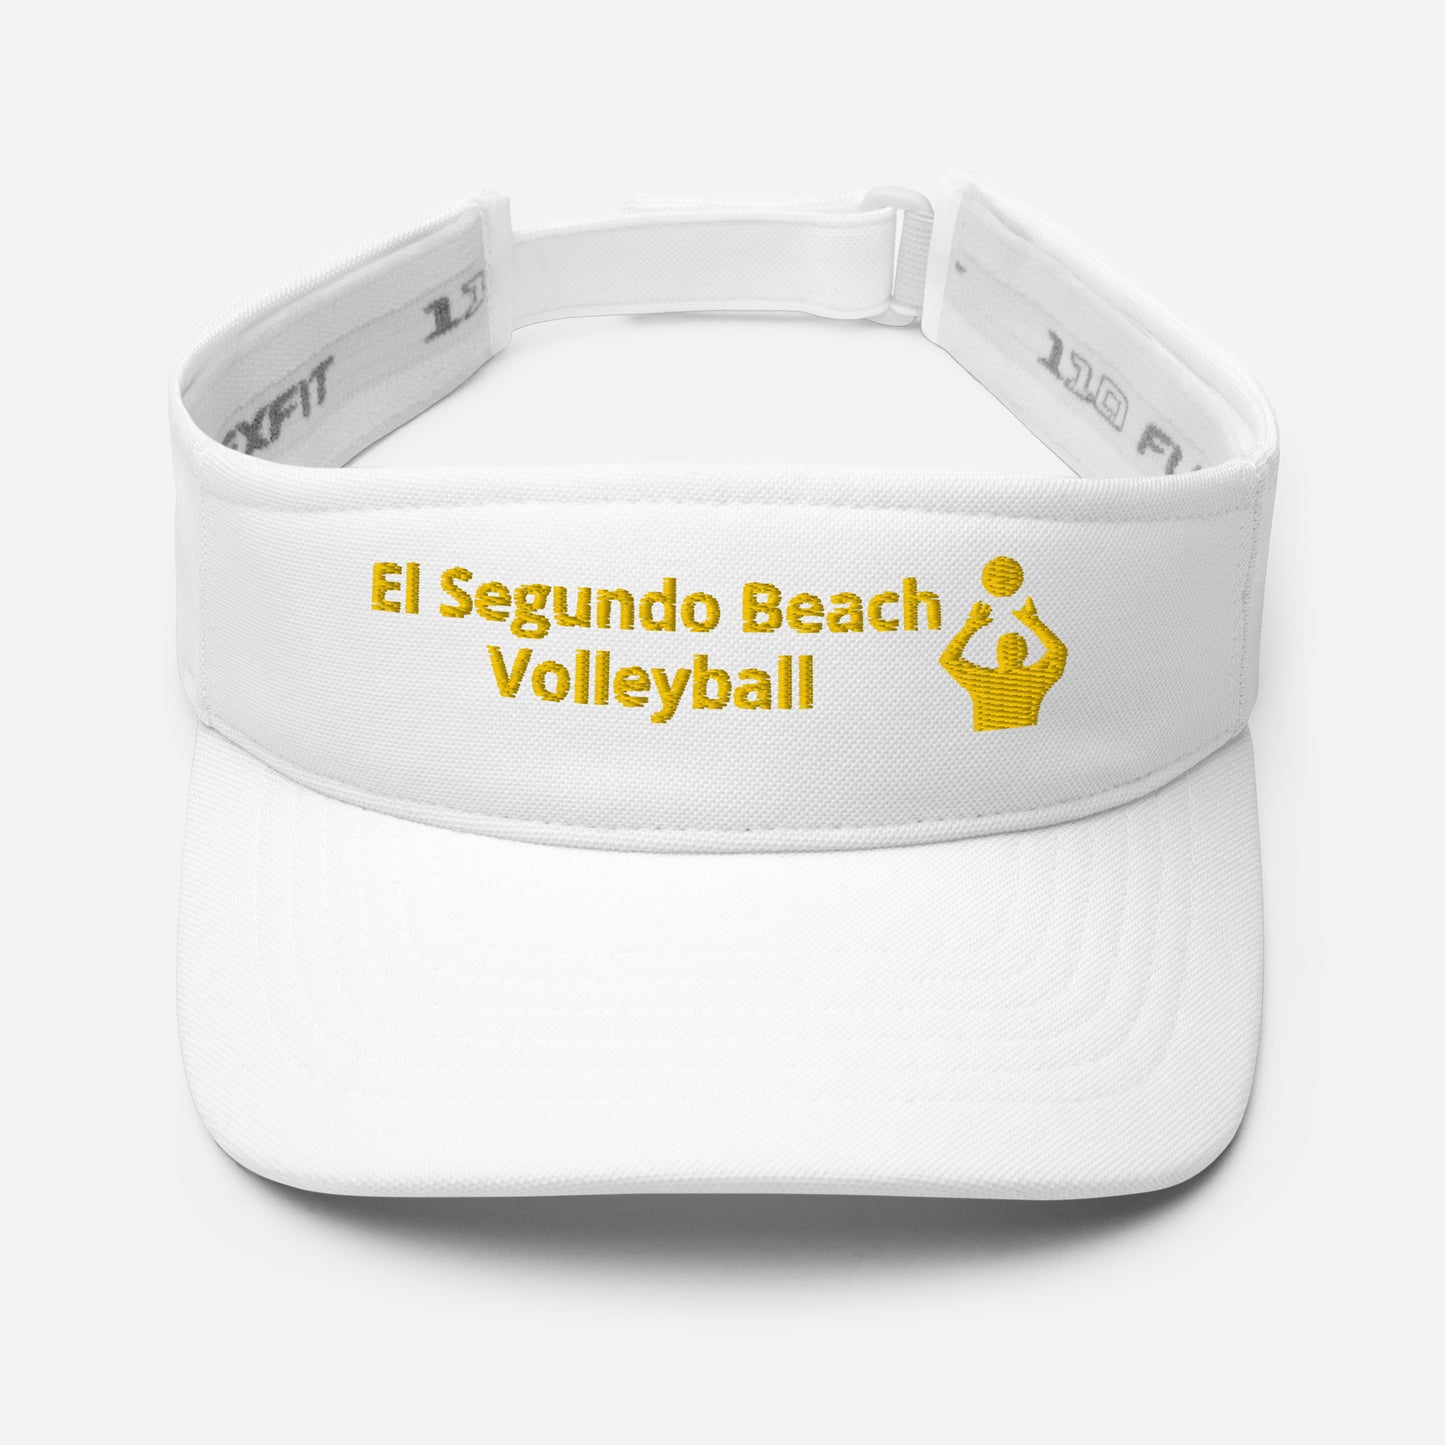 El Segundo Beach Volleyball - Visor on